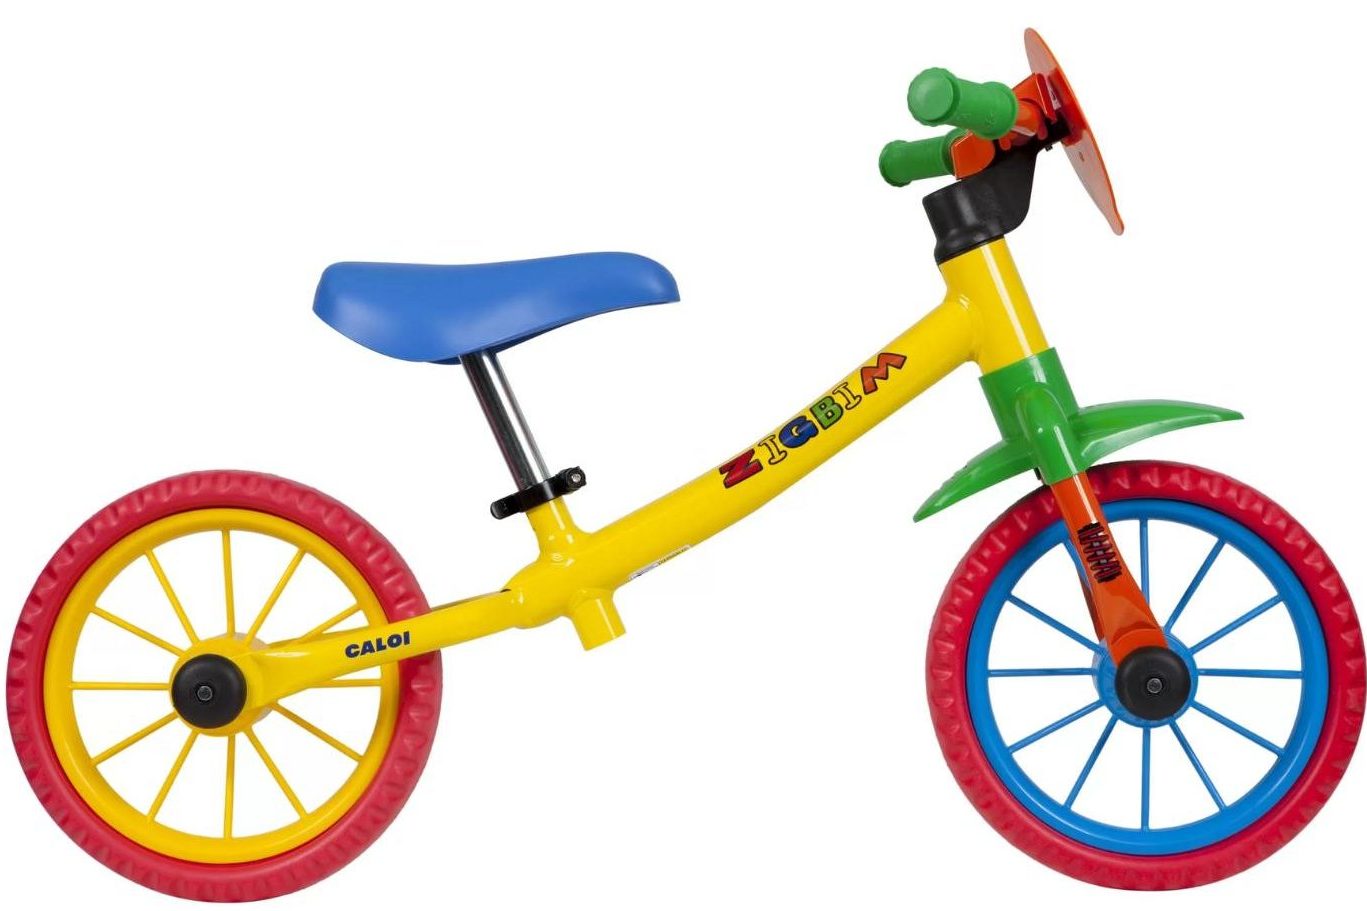 Bicicleta Infantil Balance Bike Drop Zig Bim Caloi edited 1